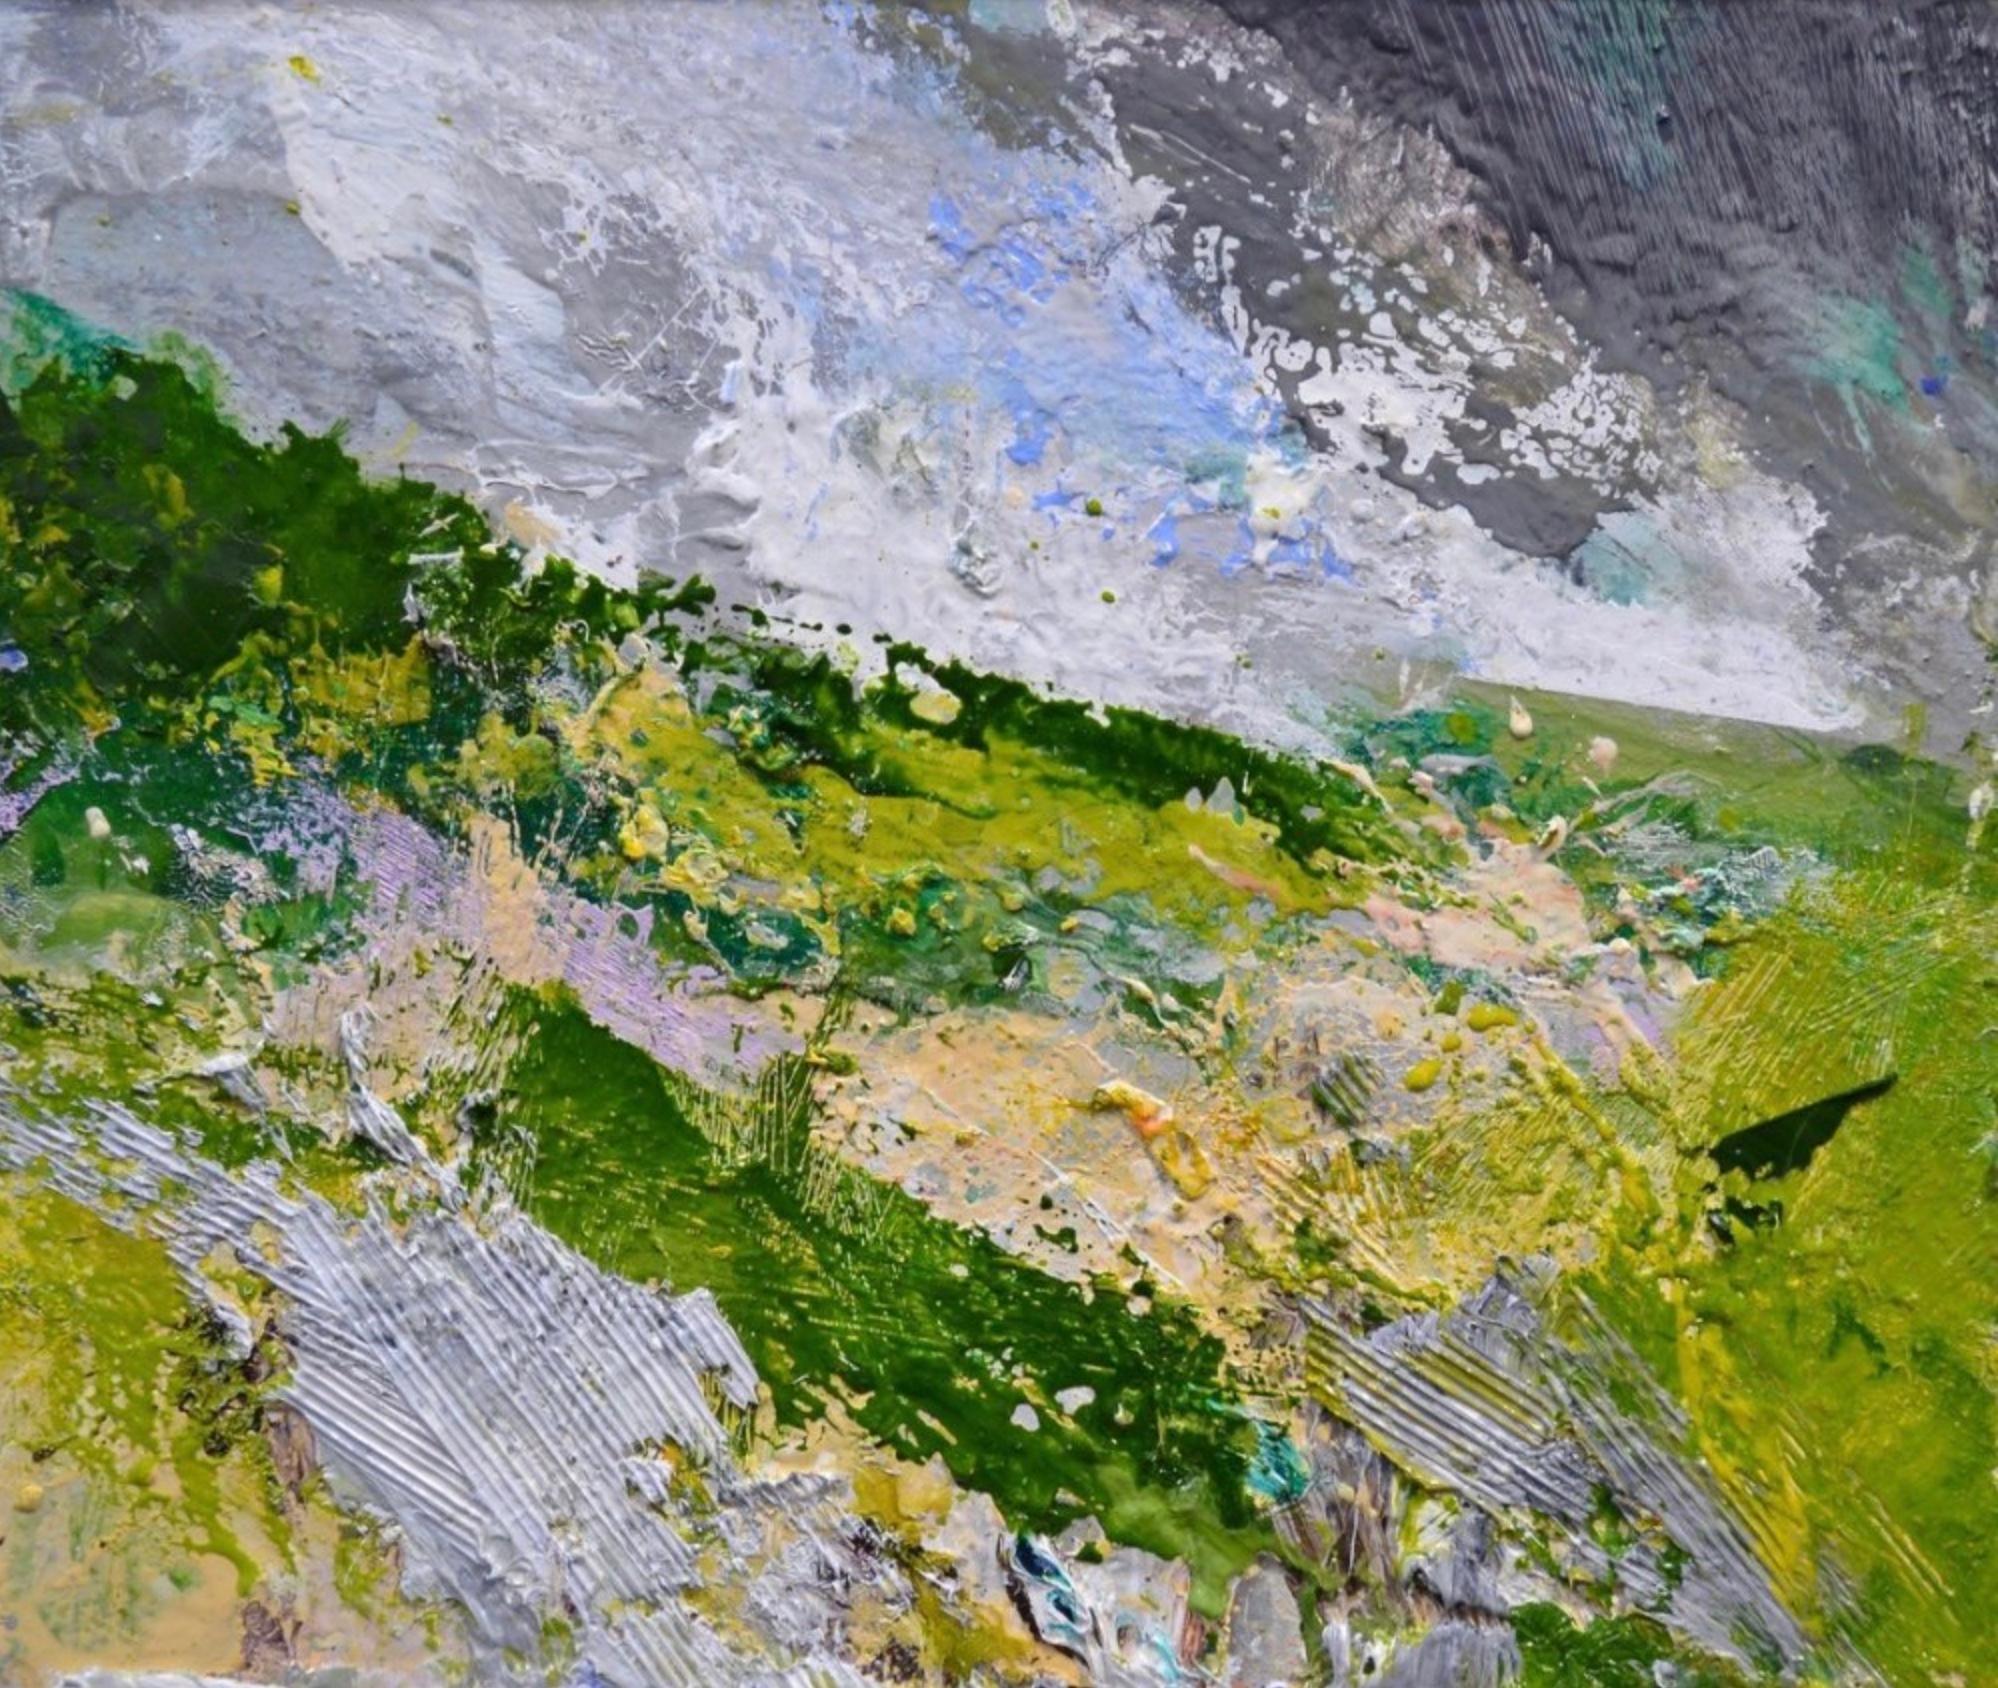 Matthew Bourne  Abstract Painting - Grassland, Rocks, Downpour